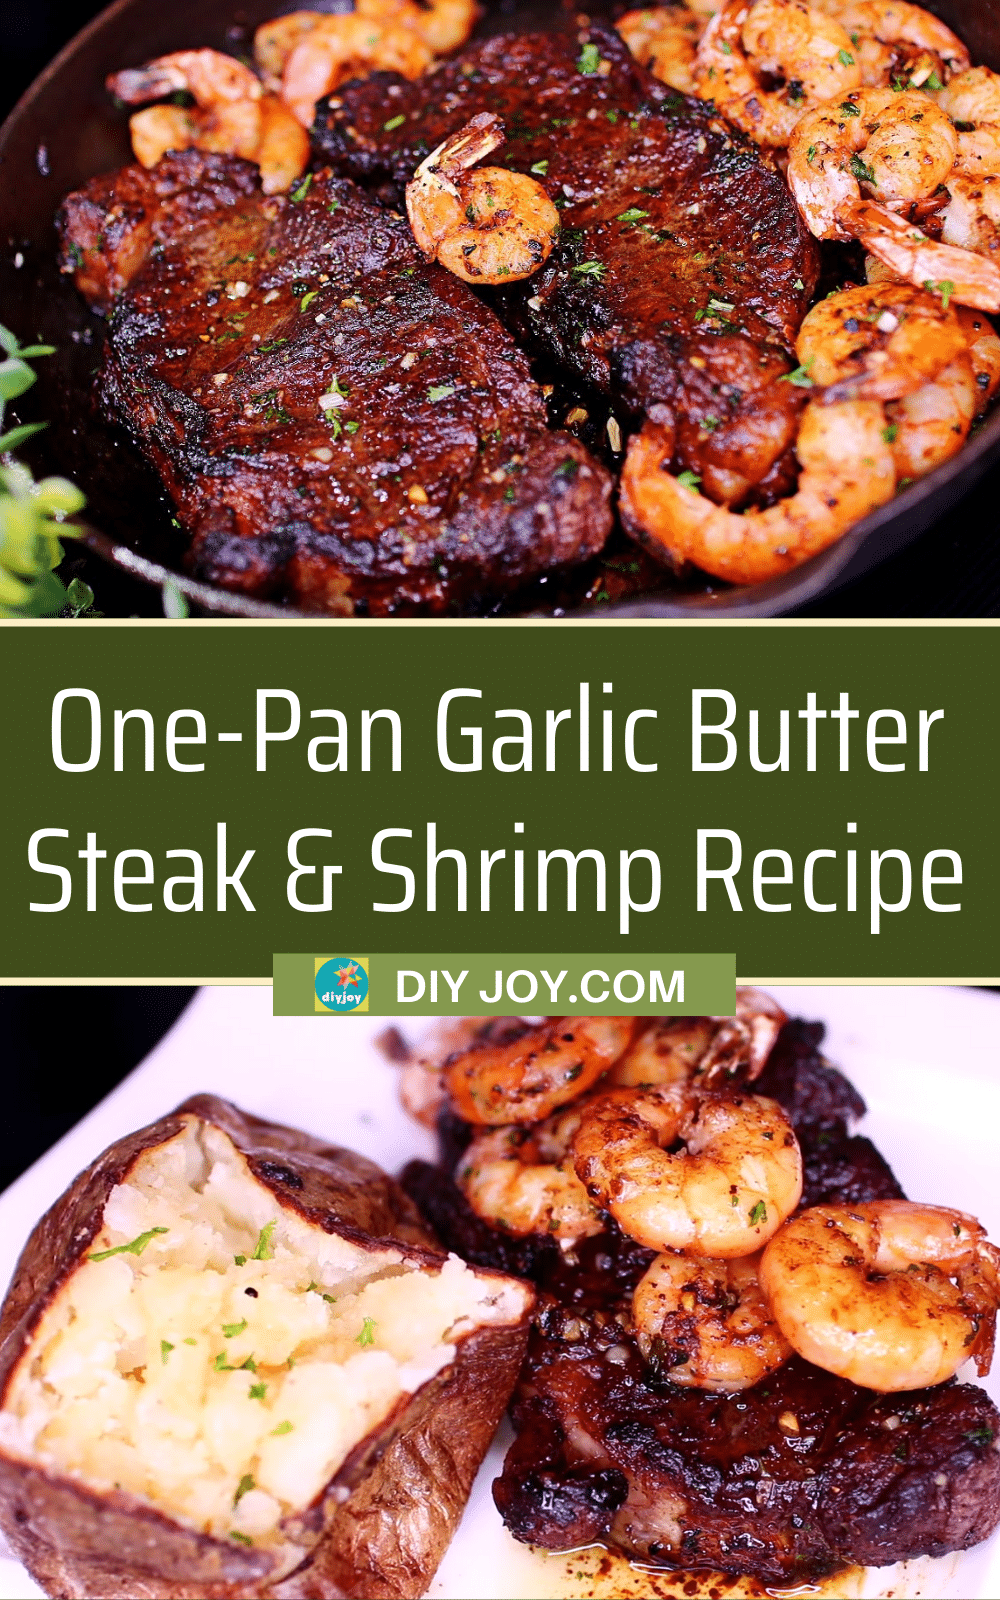 One-Pan Garlic Butter Steak & Shrimp Recipe - Dinner Ideas 